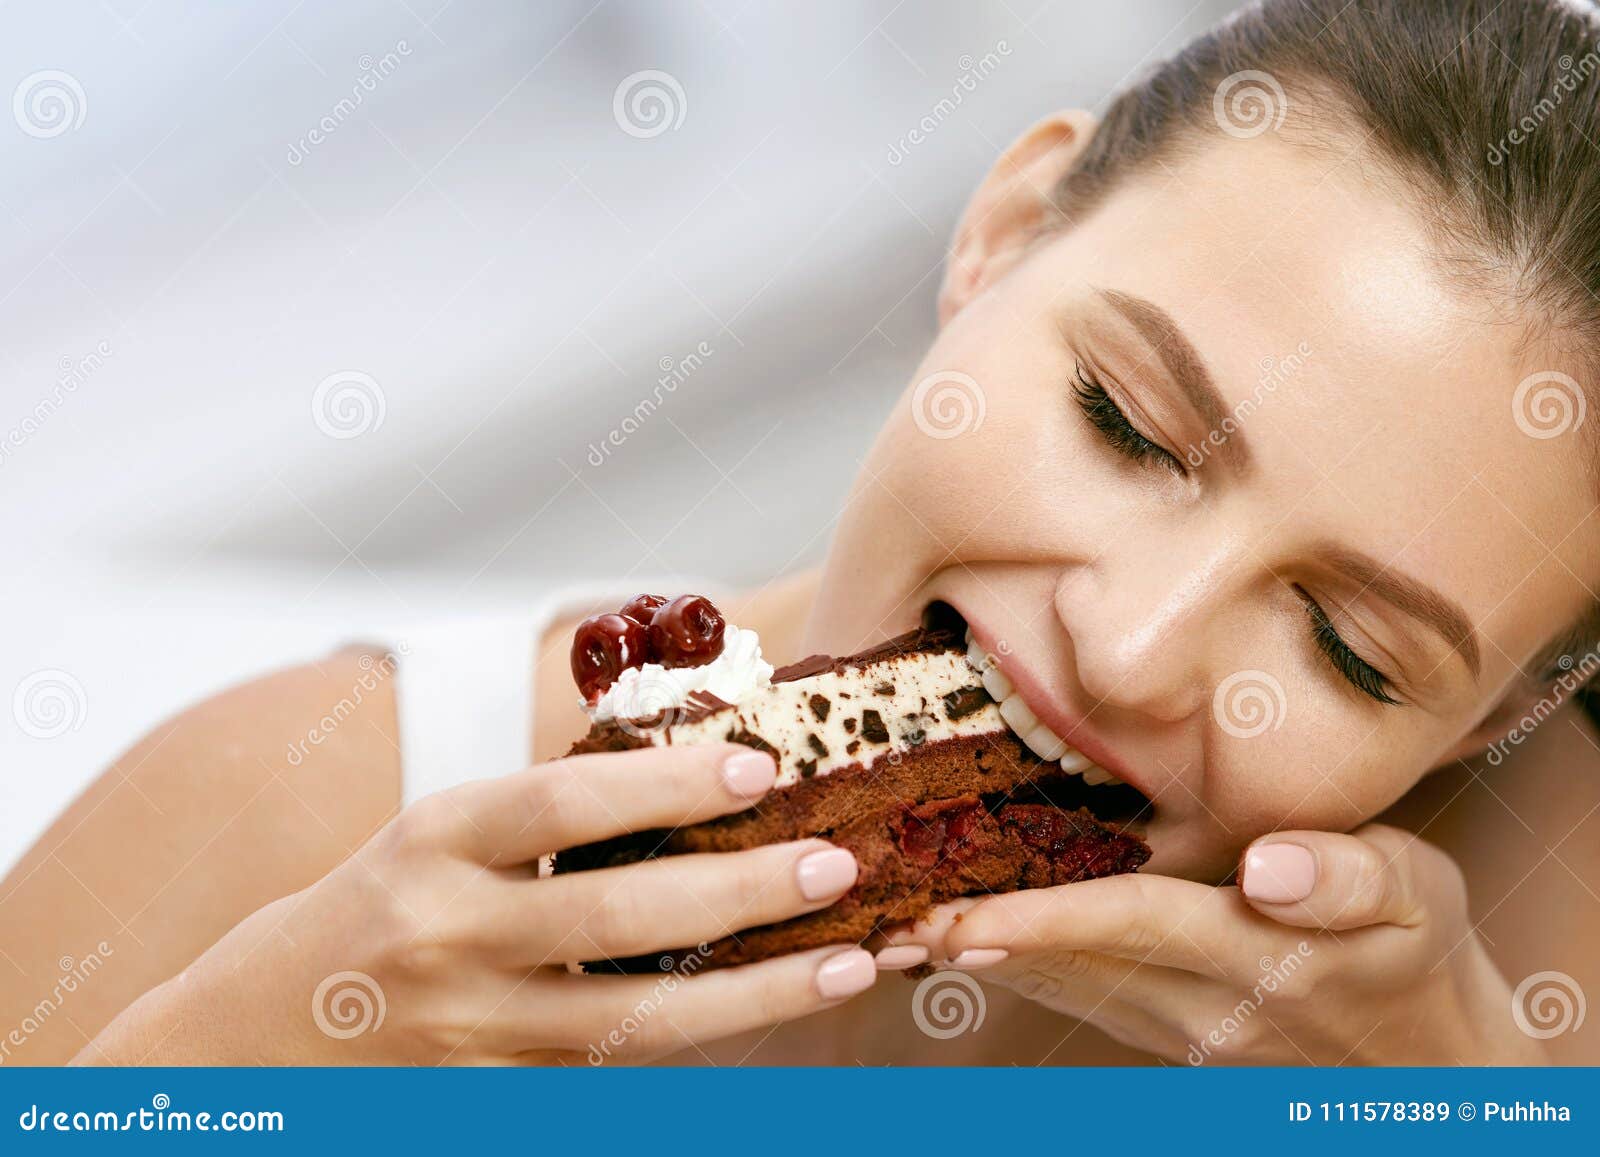 woman eating cake. beautiful female eating dessert